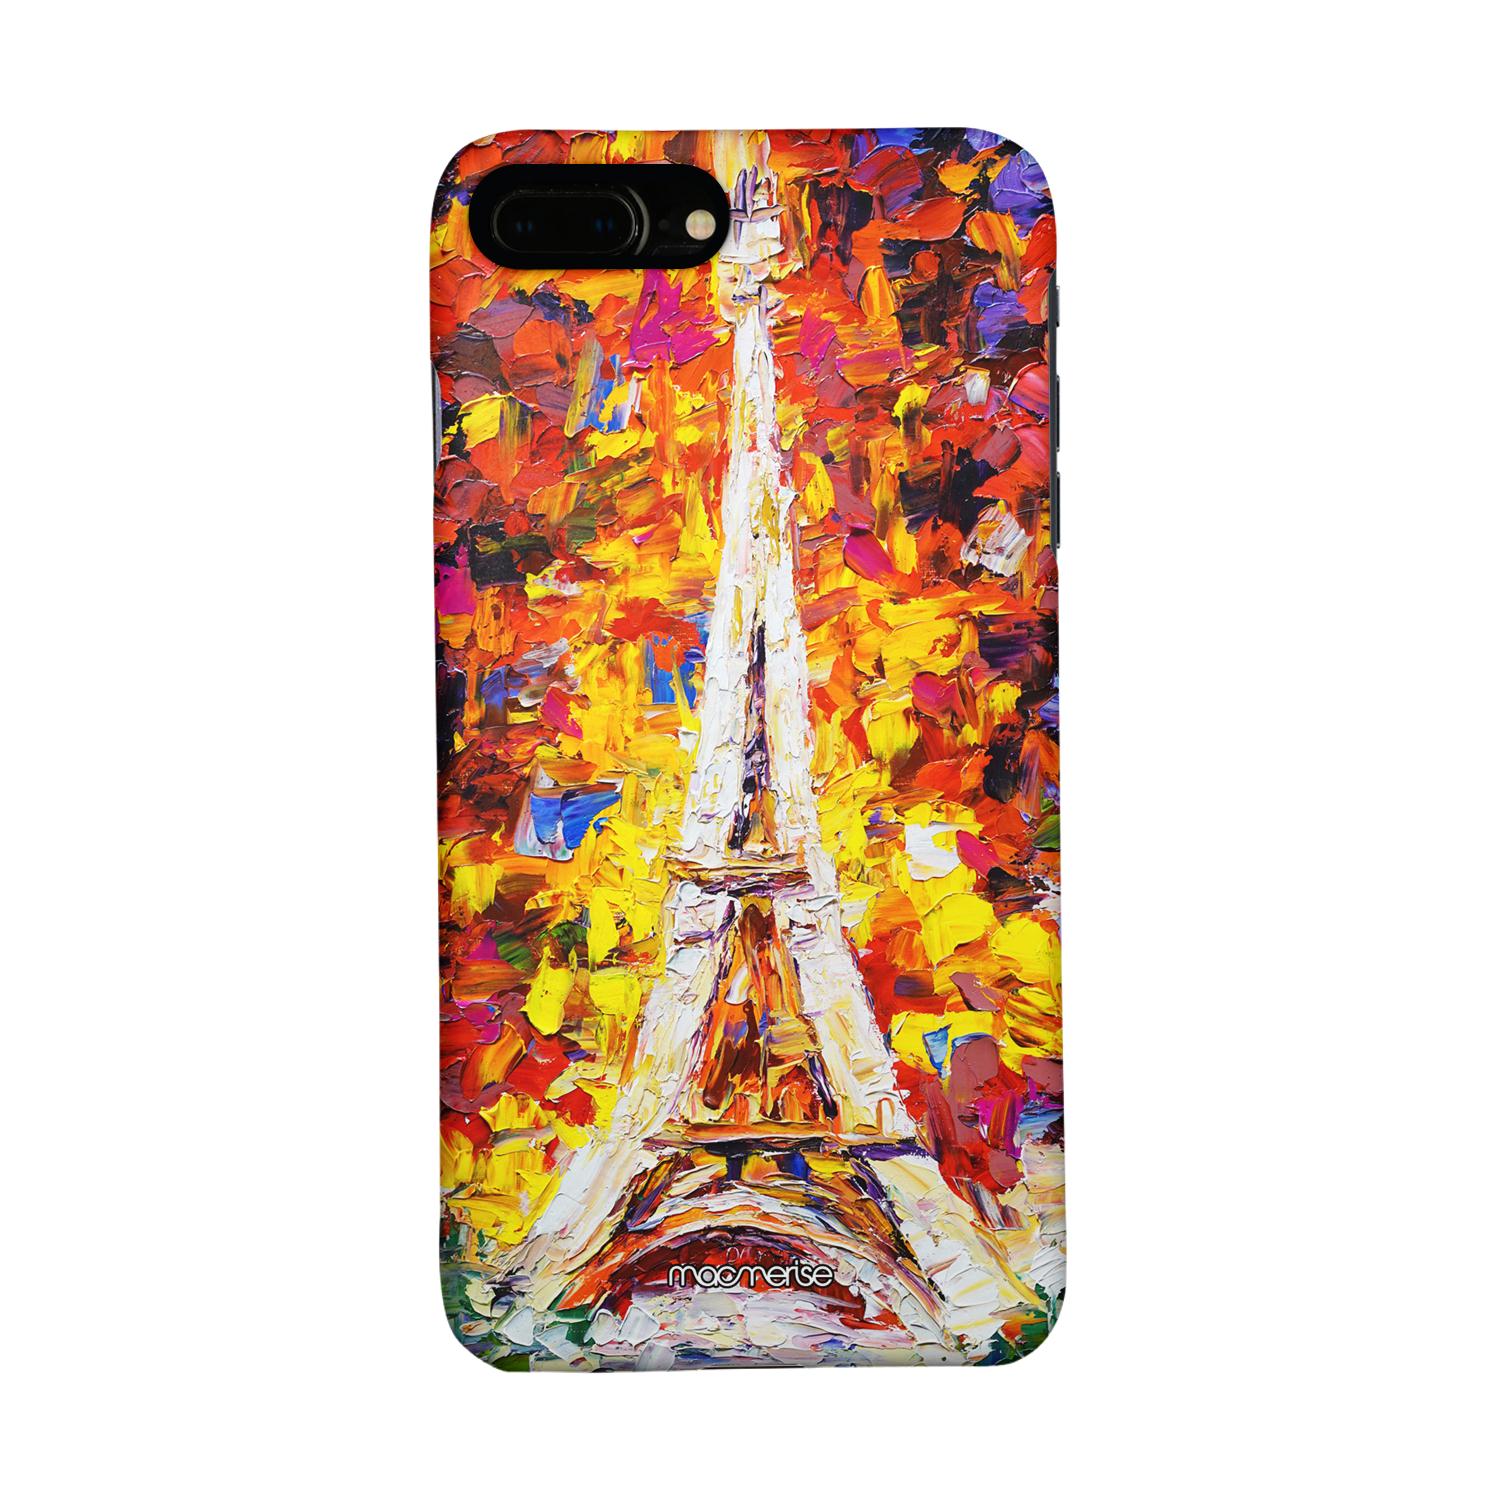 Buy Artistic Eifel - Sleek Phone Case for iPhone 7 Plus Online